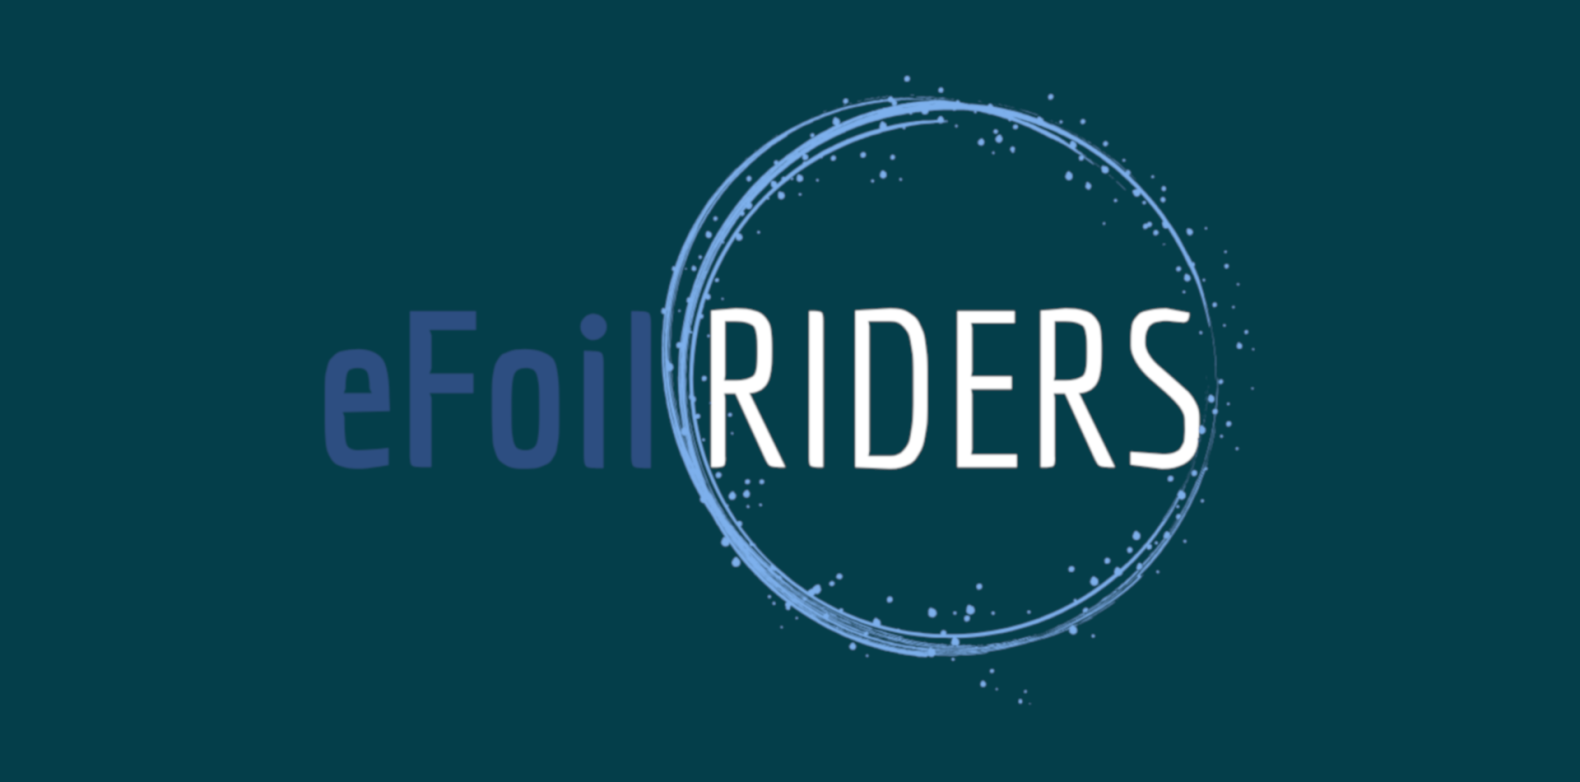 eFoil Riders